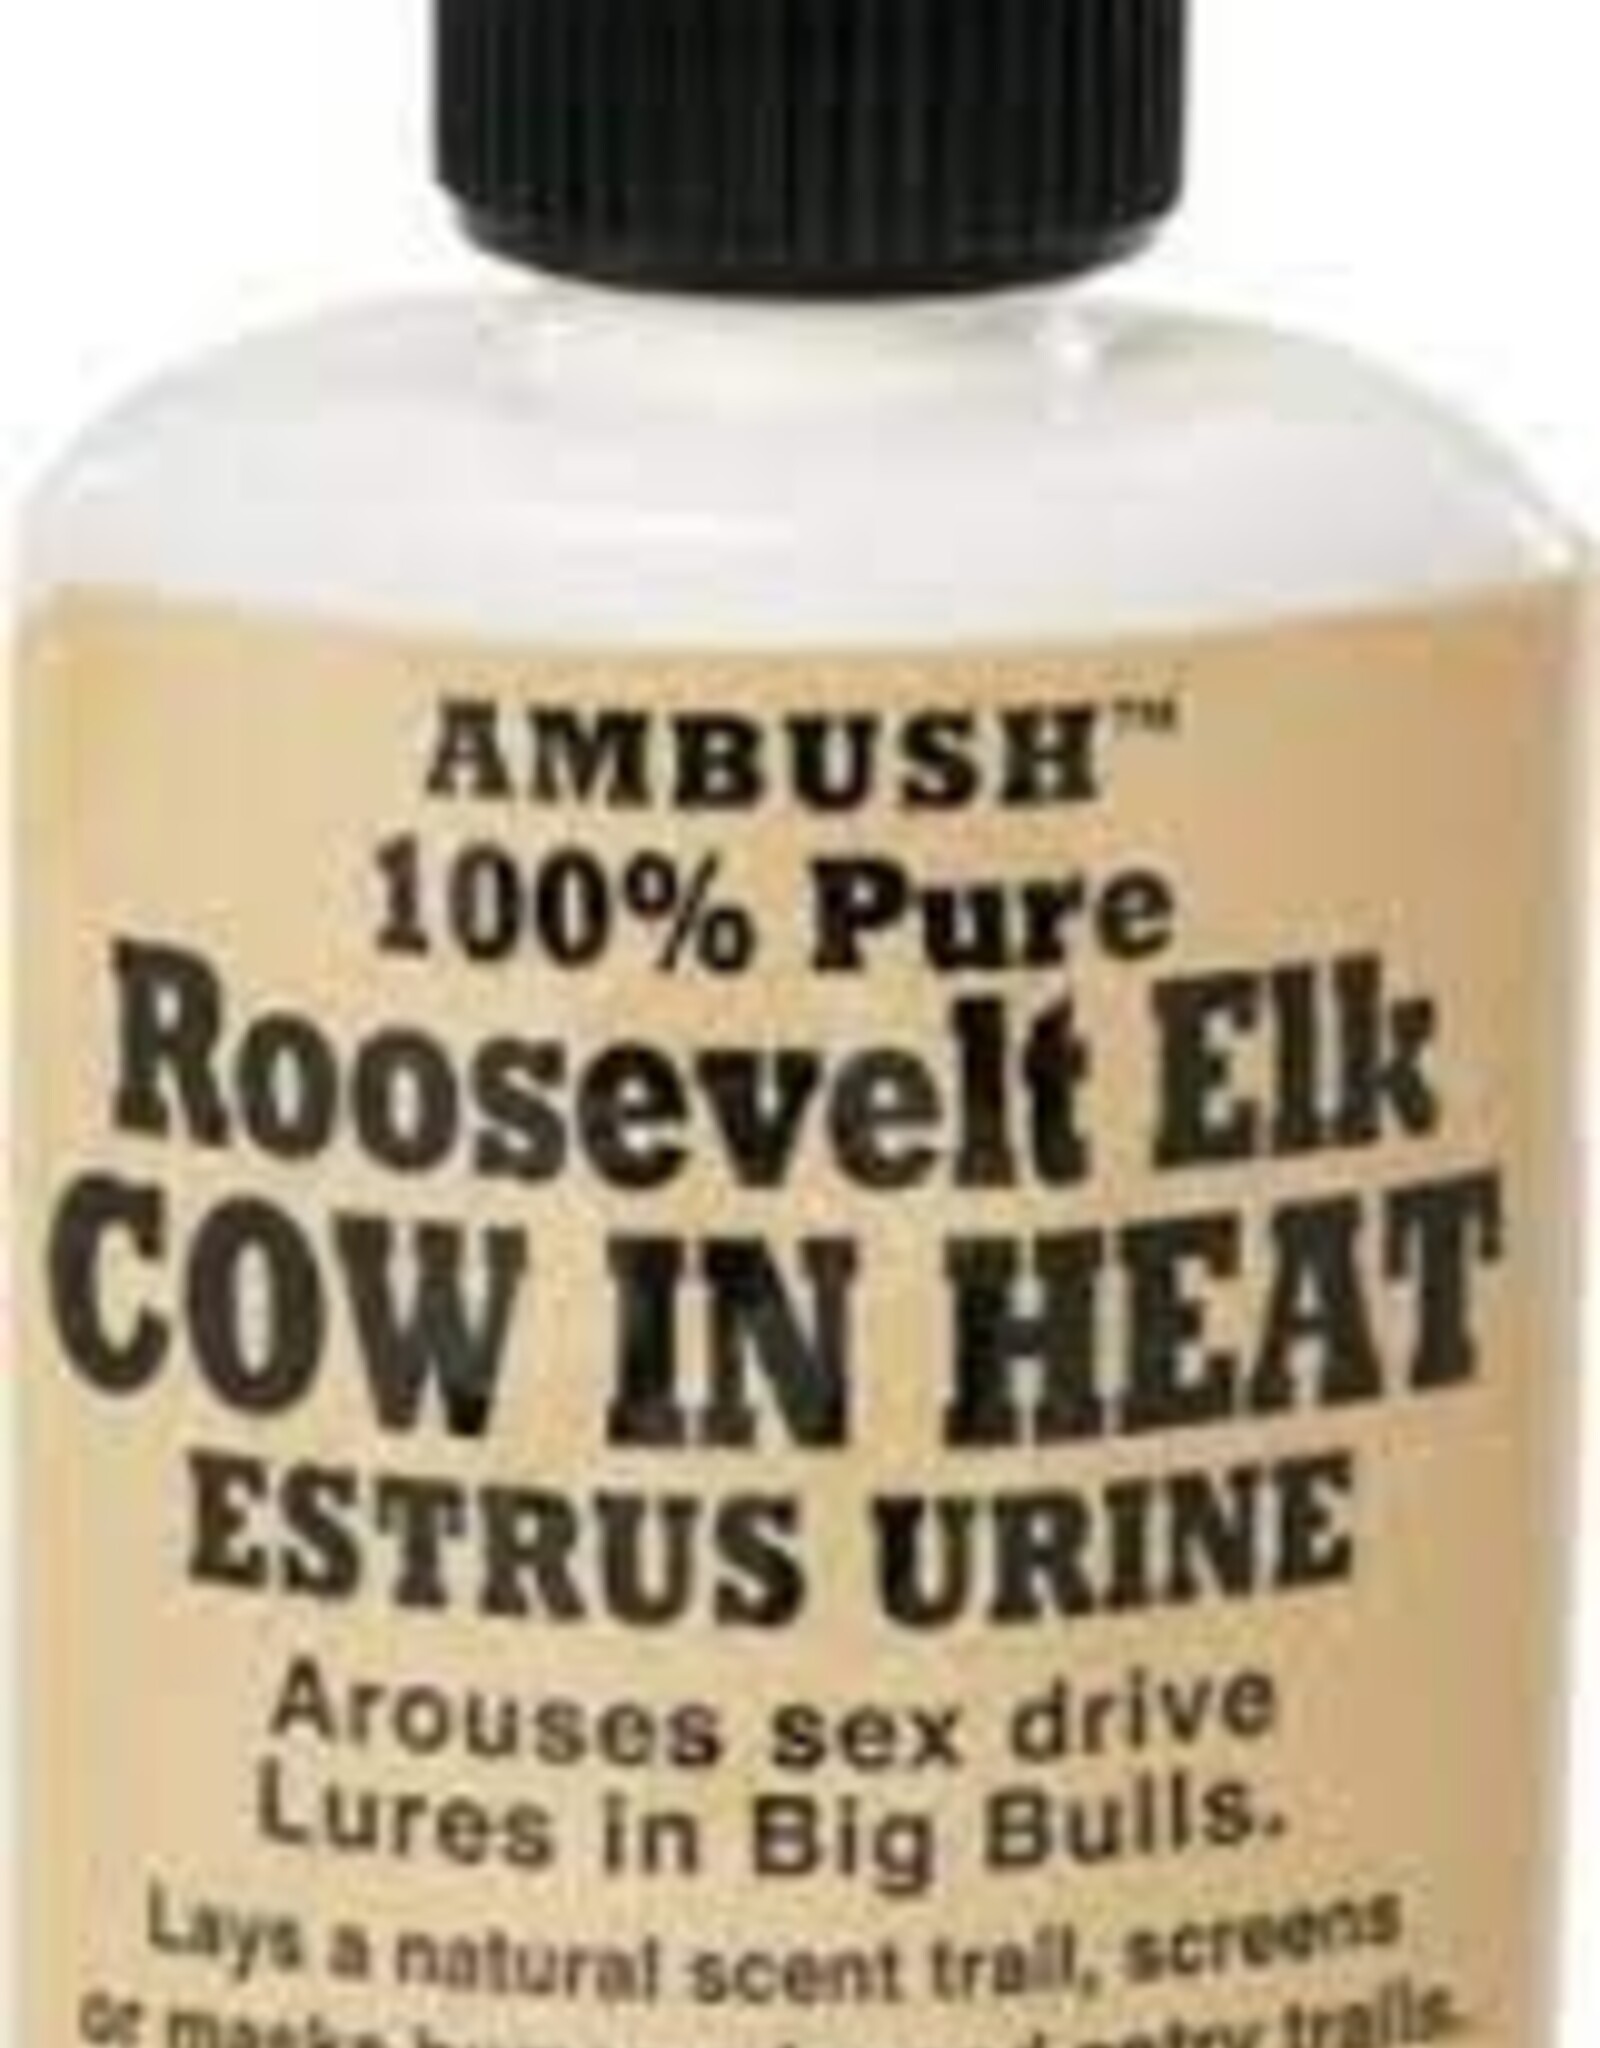 Ambush Rocky Mountain Elk Cow In Heat Estrus Urine 3 1/2 oz